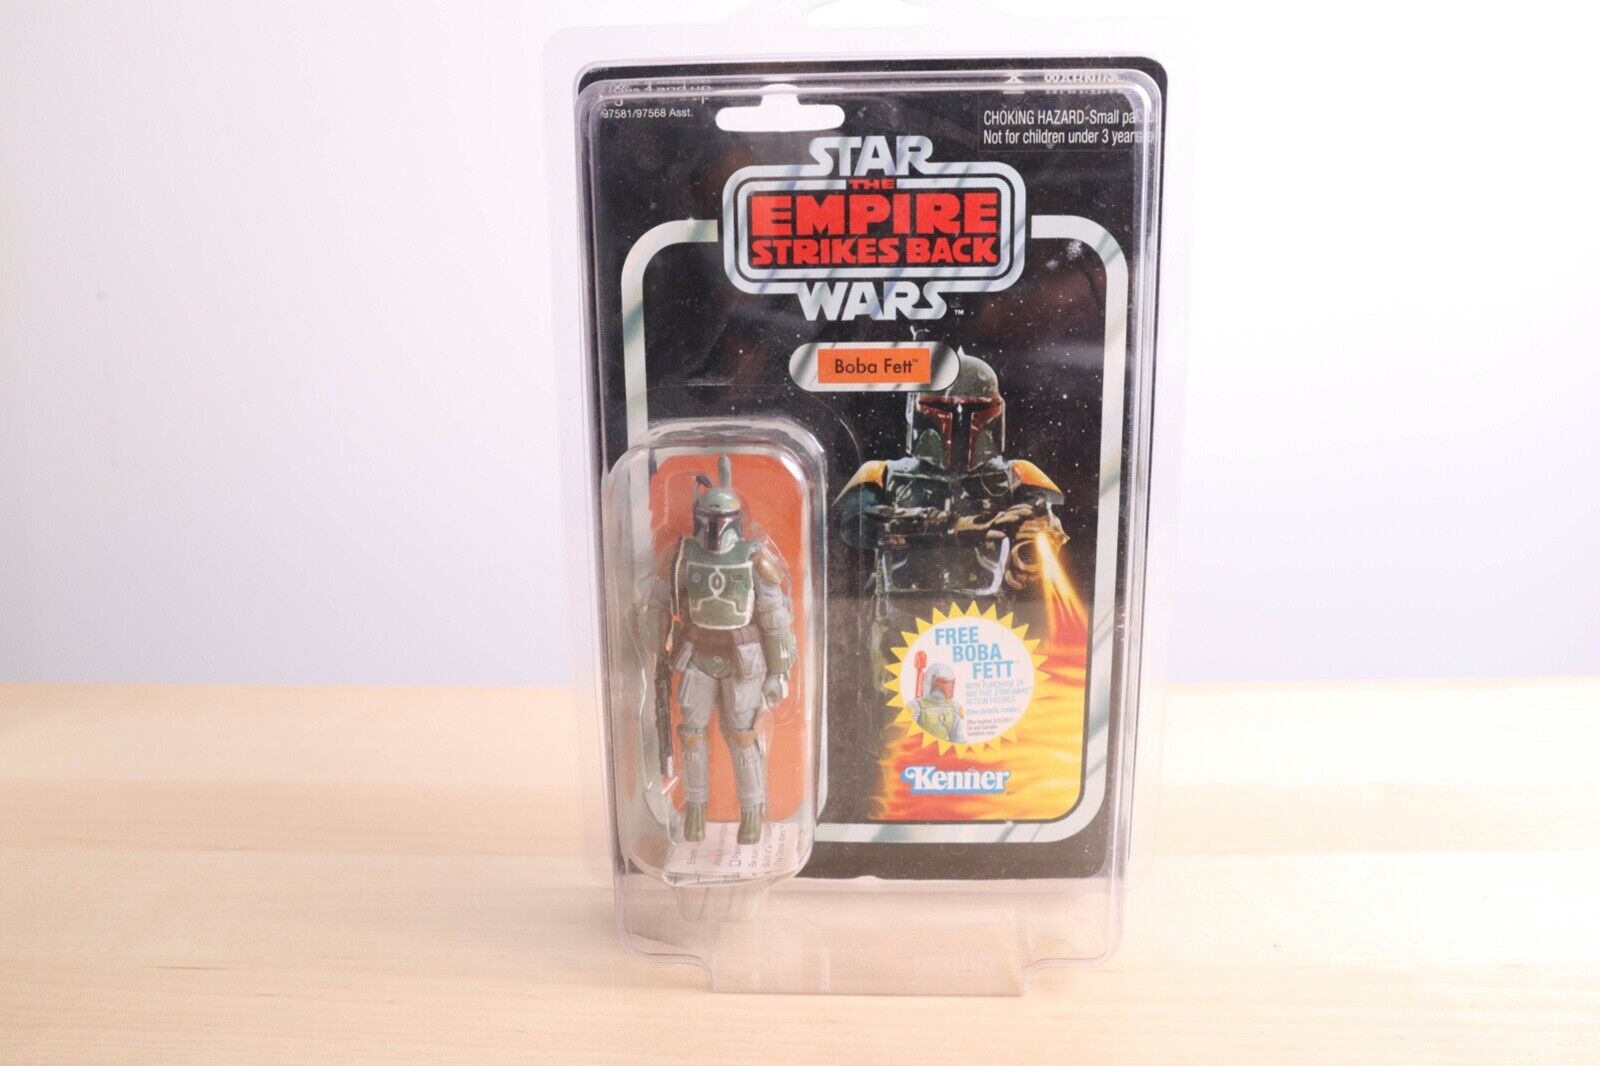 Star Wars The Empire Strikes Back: Boba Fett Action Figure Hasbro - 2010